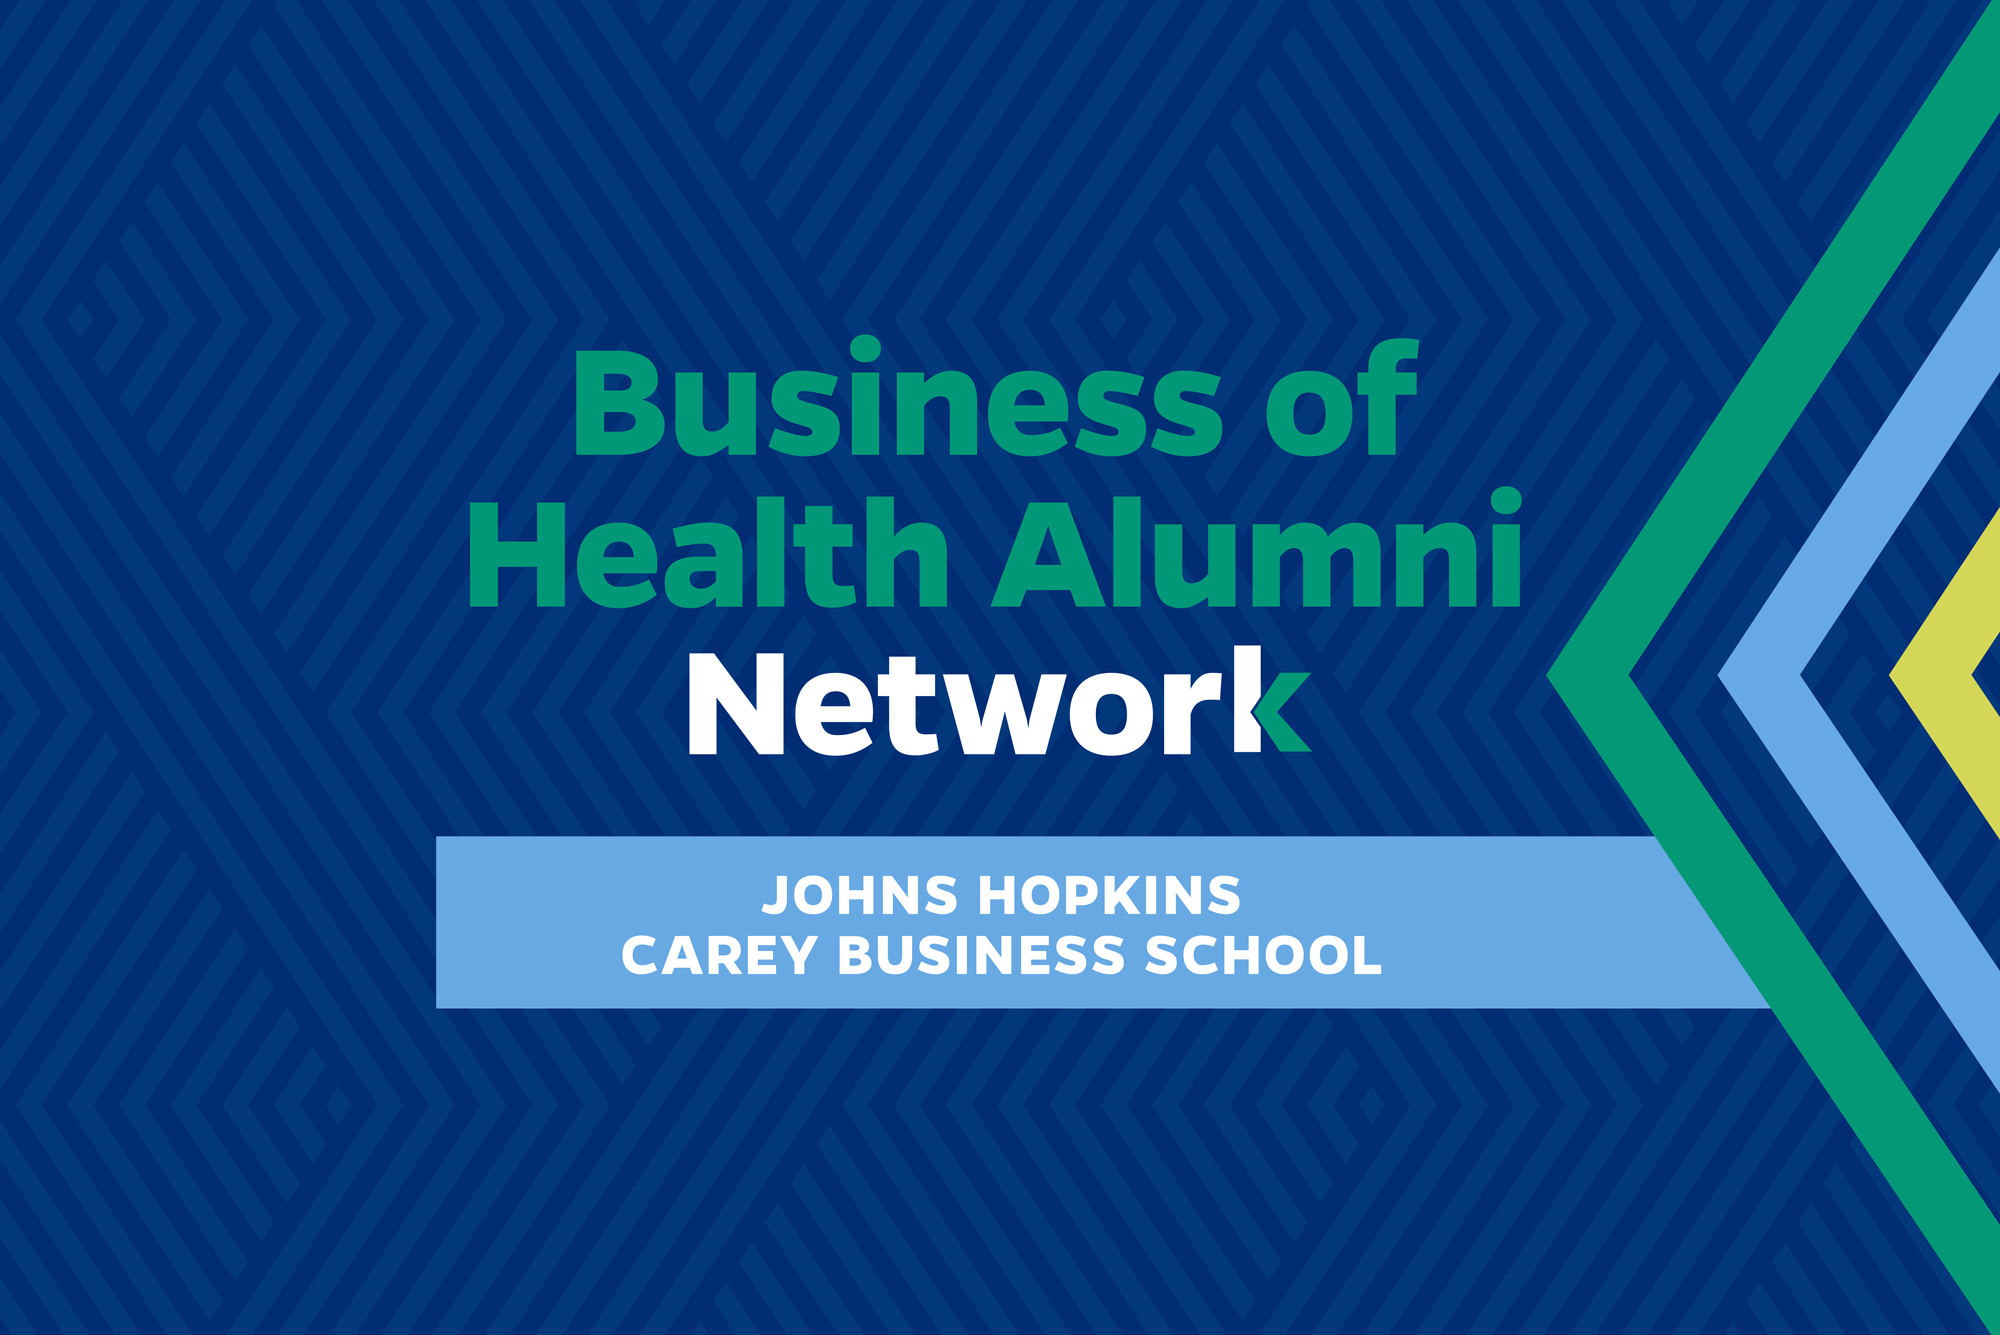 Carey Business School: Hot Topics in Health with Toby Gordon